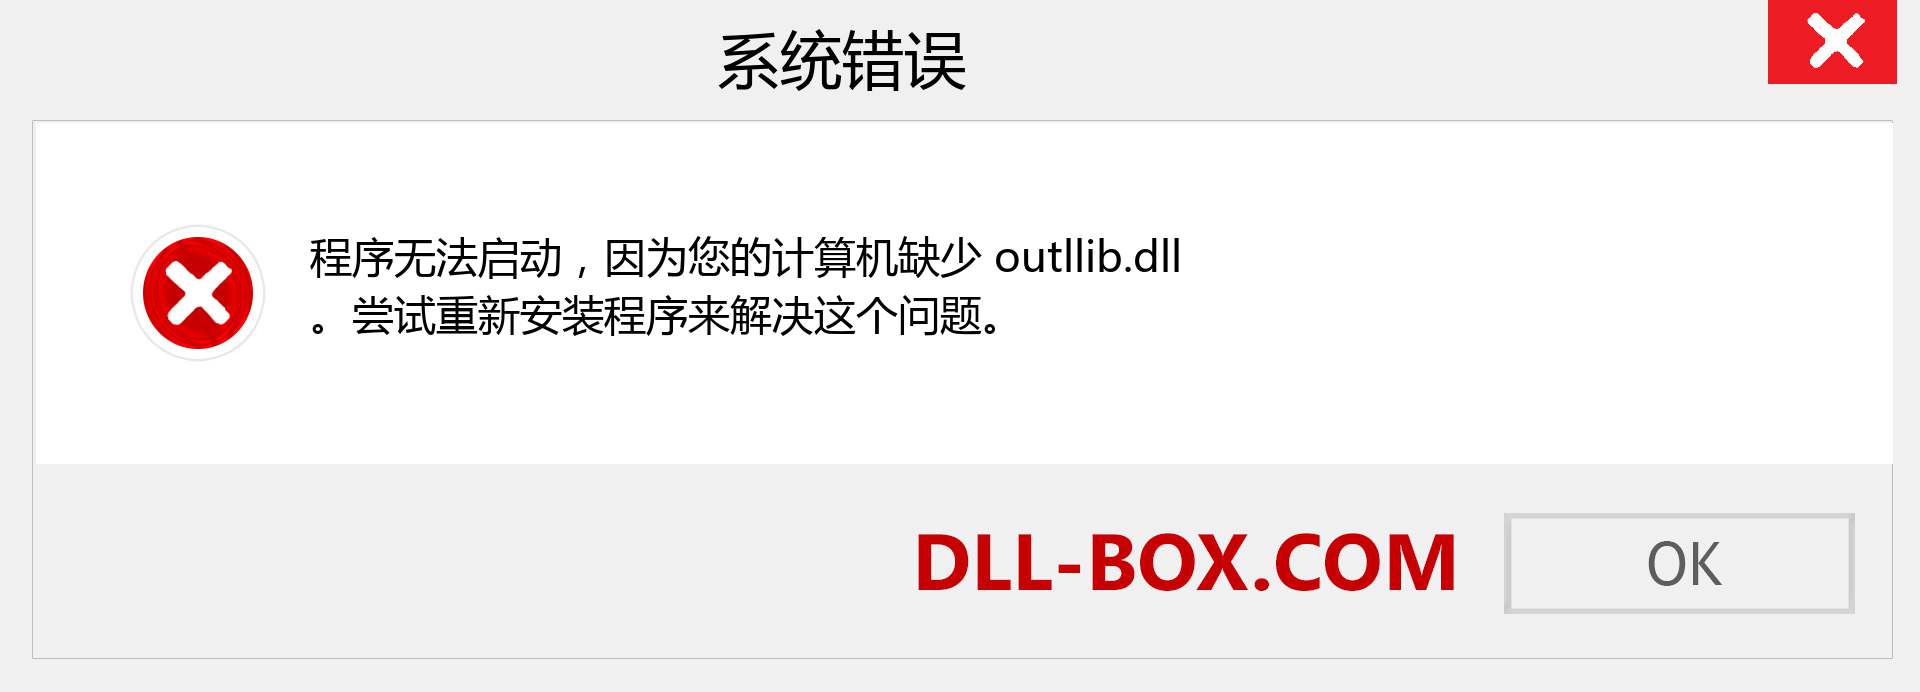 outllib.dll 文件丢失？。 适用于 Windows 7、8、10 的下载 - 修复 Windows、照片、图像上的 outllib dll 丢失错误